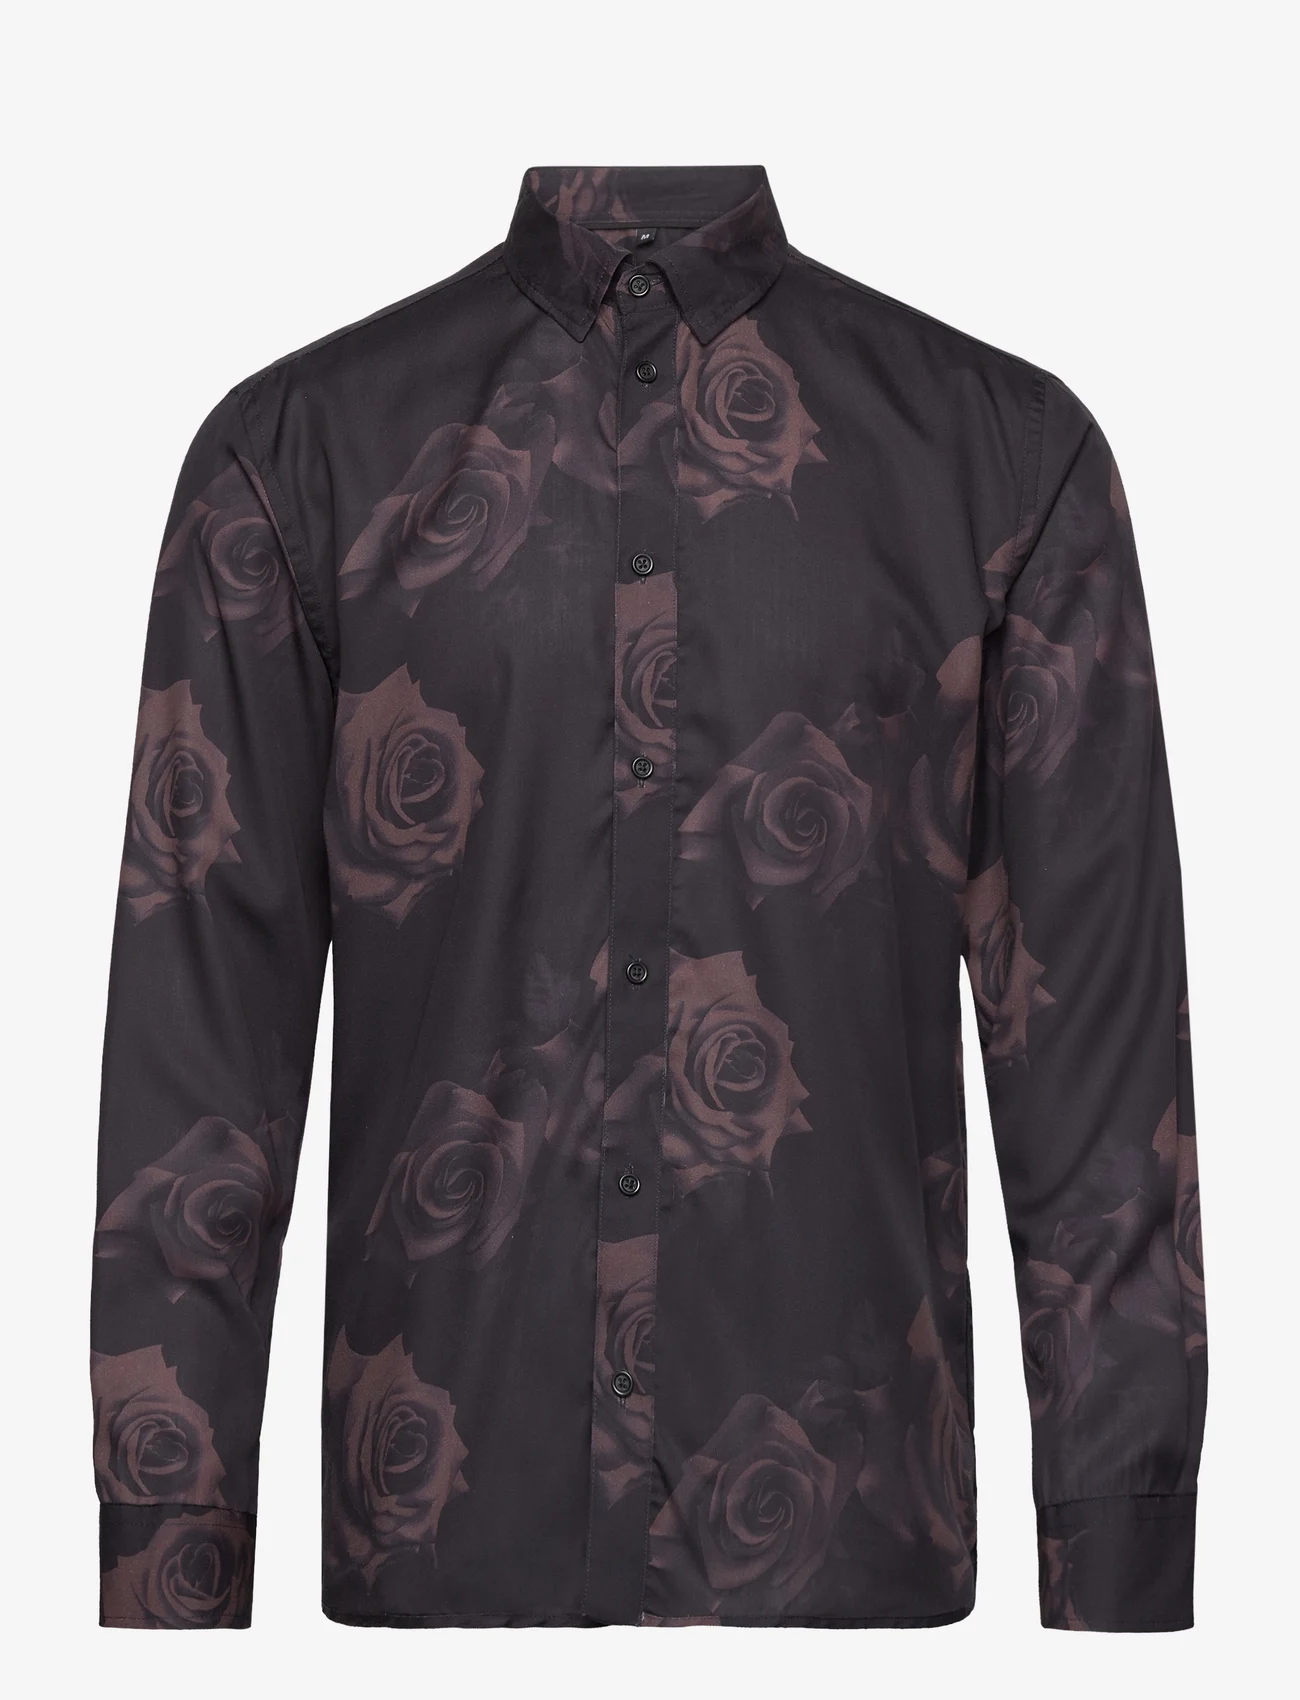 Bruuns Bazaar - WonBBGilly shirt - business skjorter - brown flower - 0